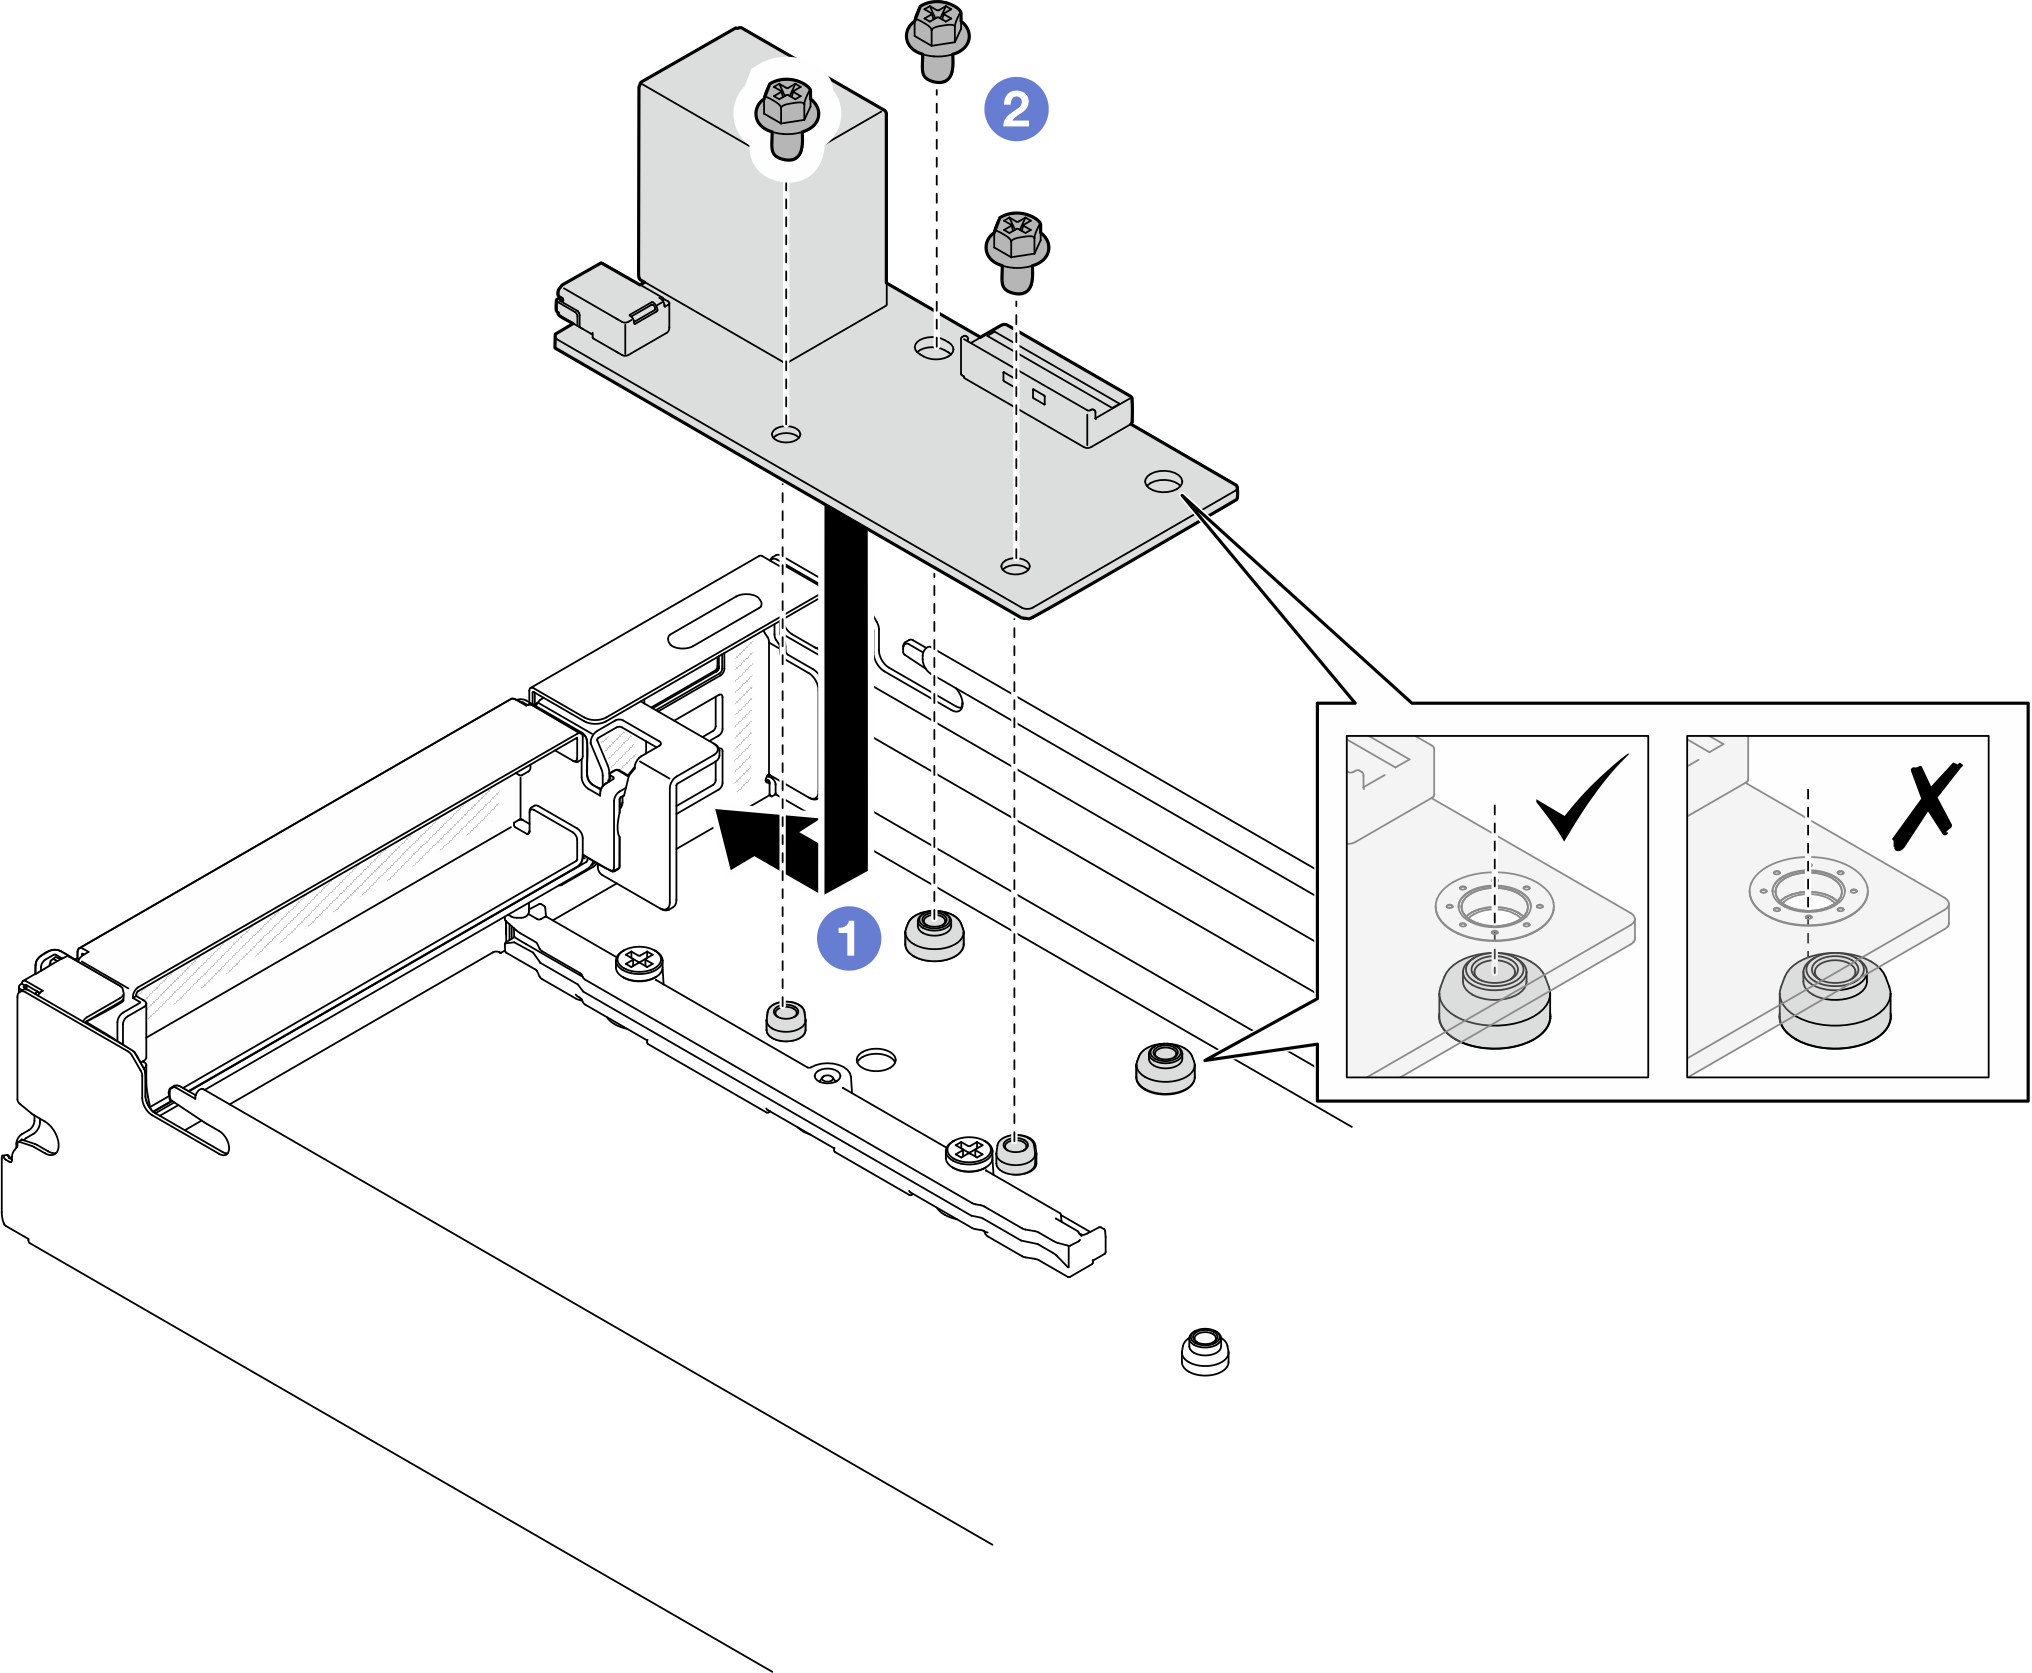 Installation of the rear I/O module